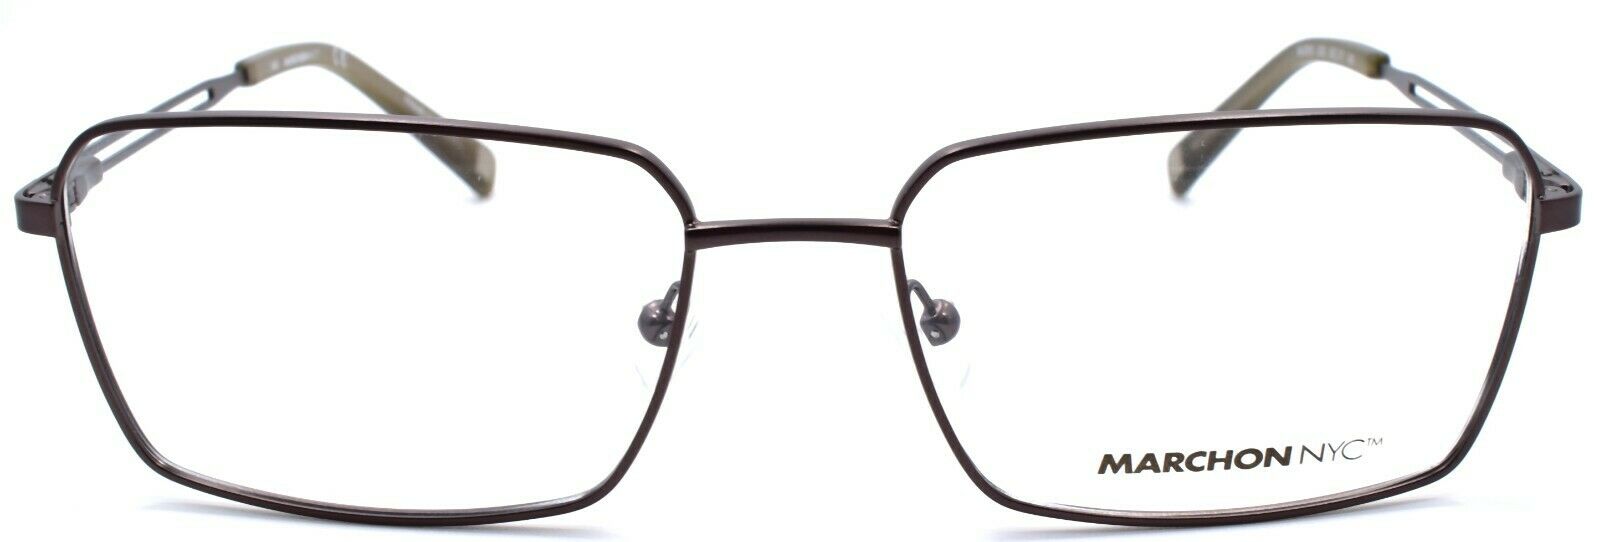 2-Marchon M2010 033 Men's Eyeglasses Frames 55-17-145 Gunmetal-886895447089-IKSpecs